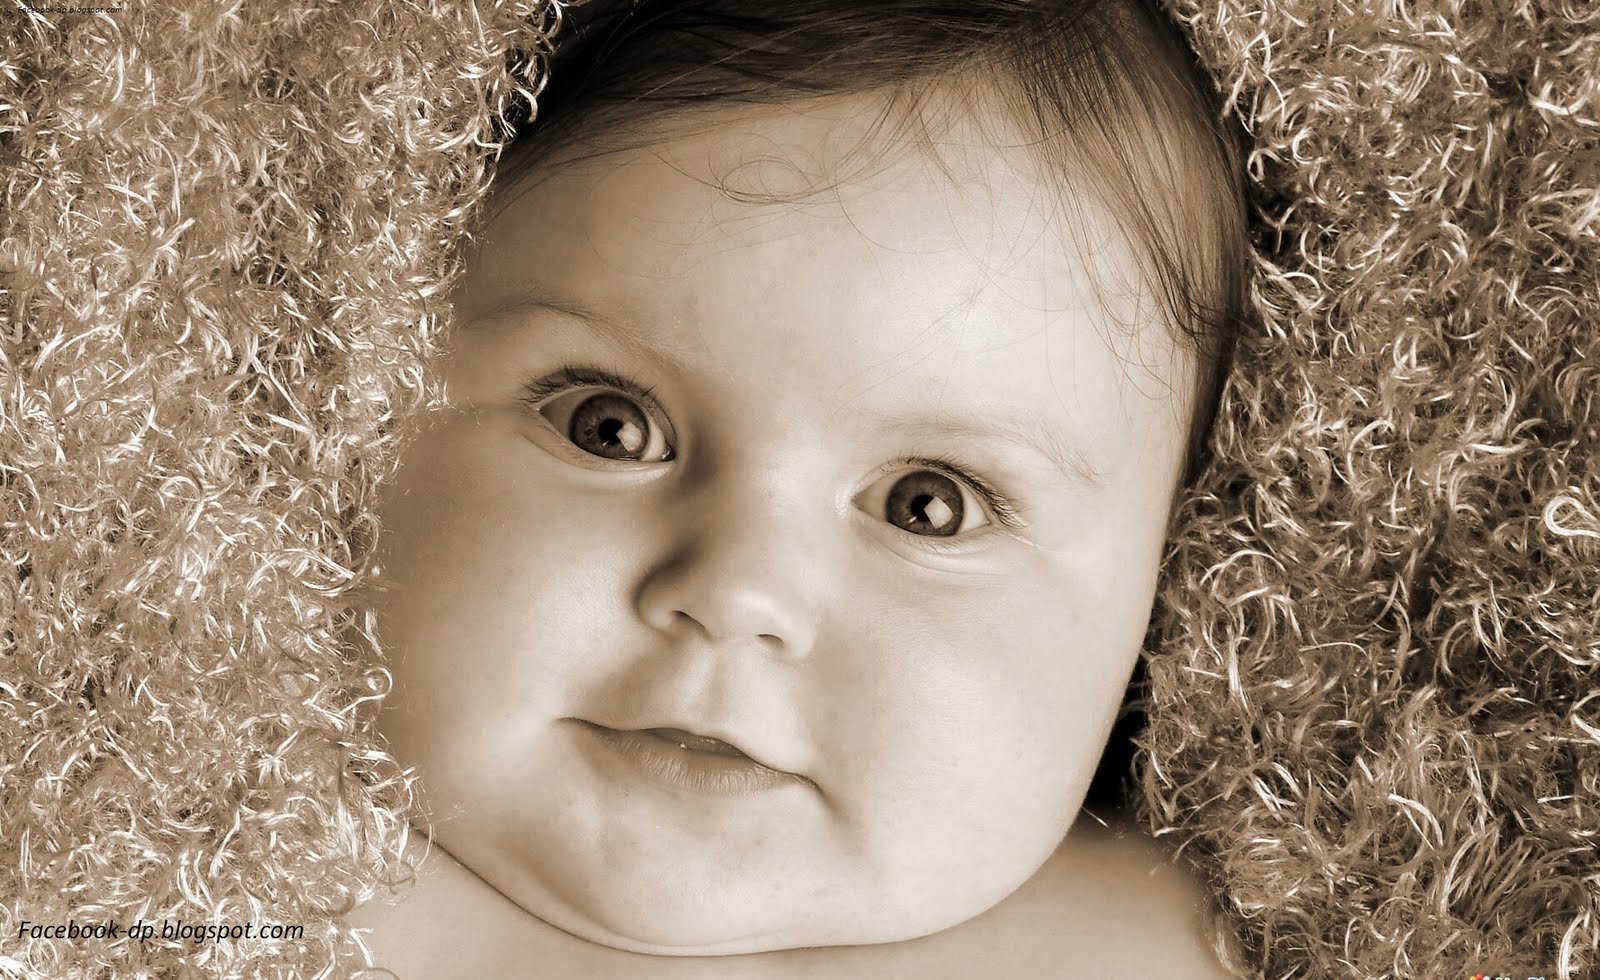 Facebook dp: Latest Facebook Babies pictures-dp, free download fb ...